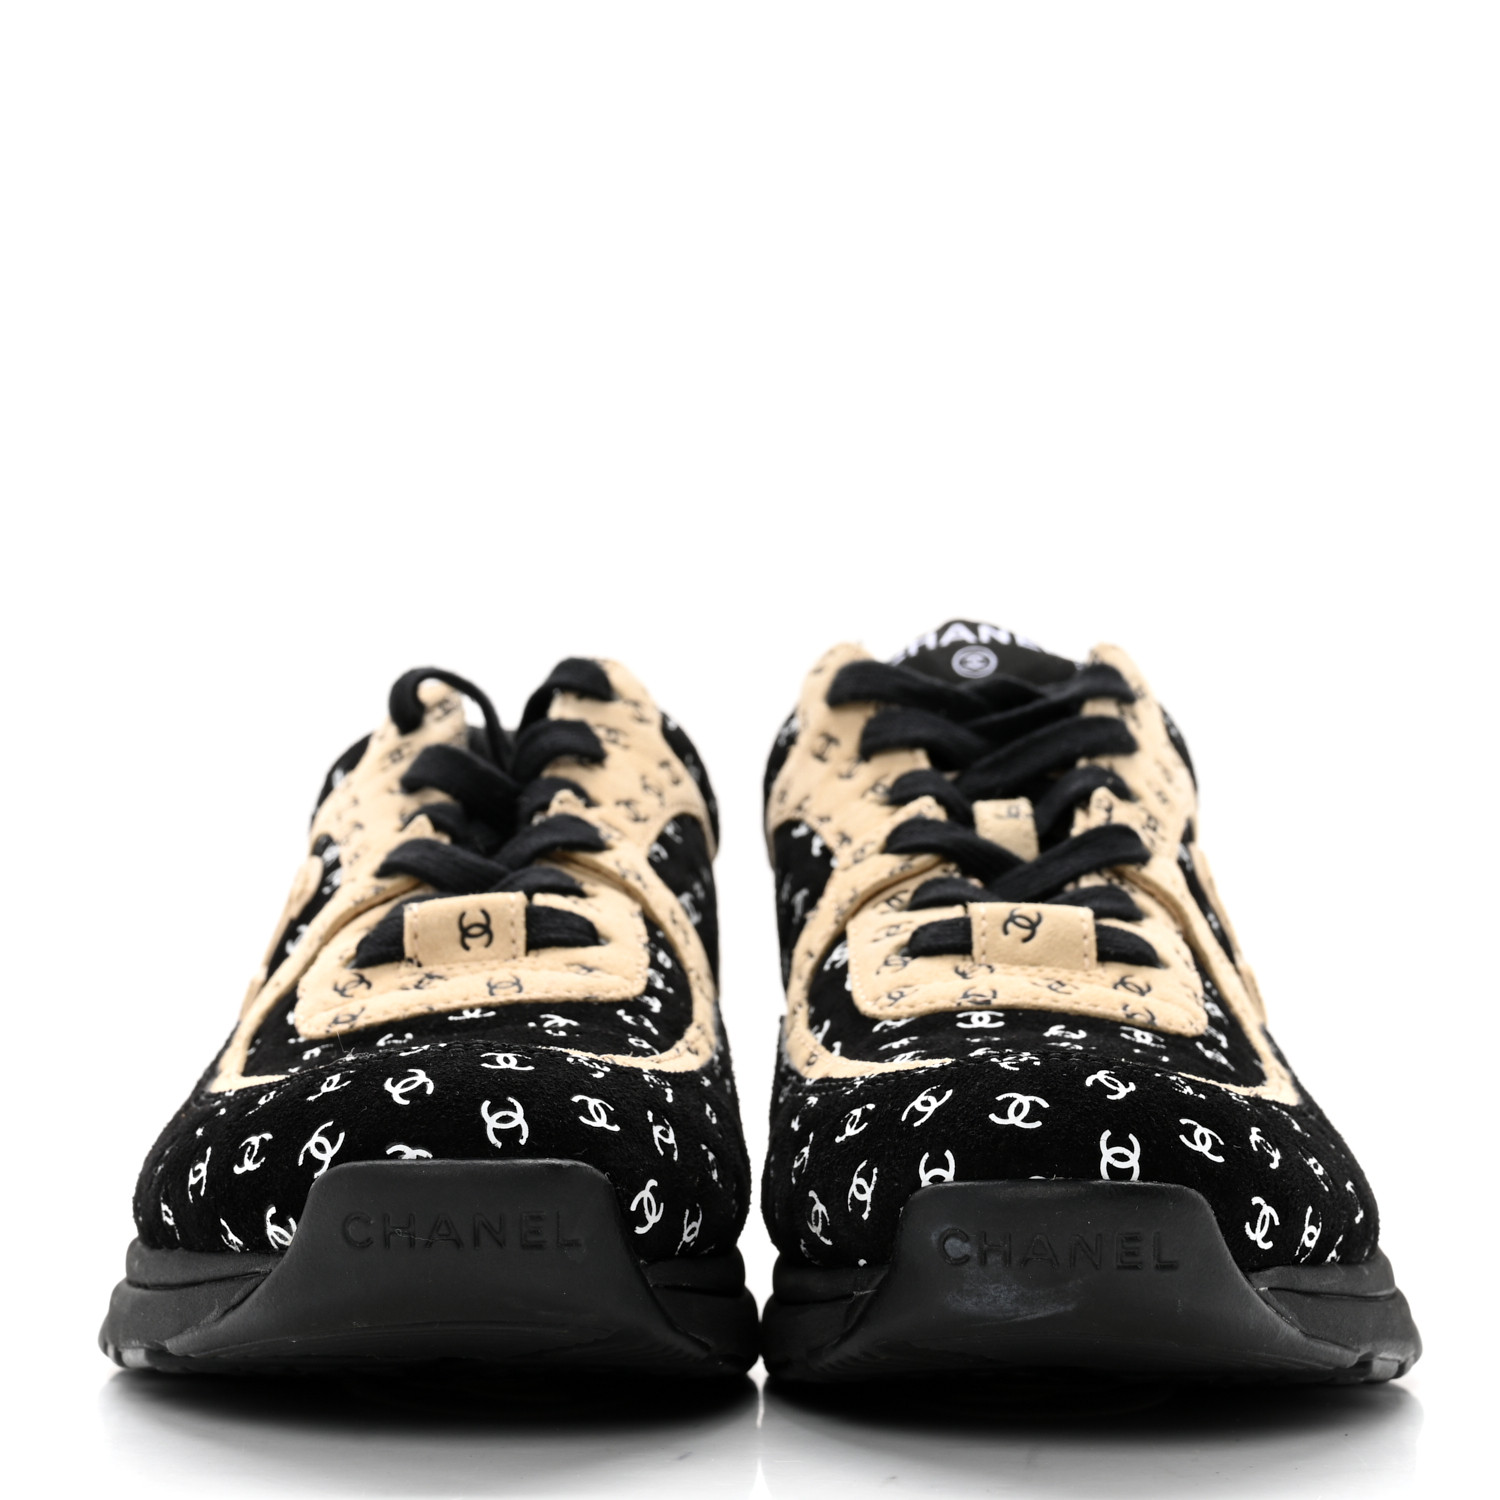 CHANEL Nylon Suede Calfskin Printed CC Sneakers 40 Black Beige